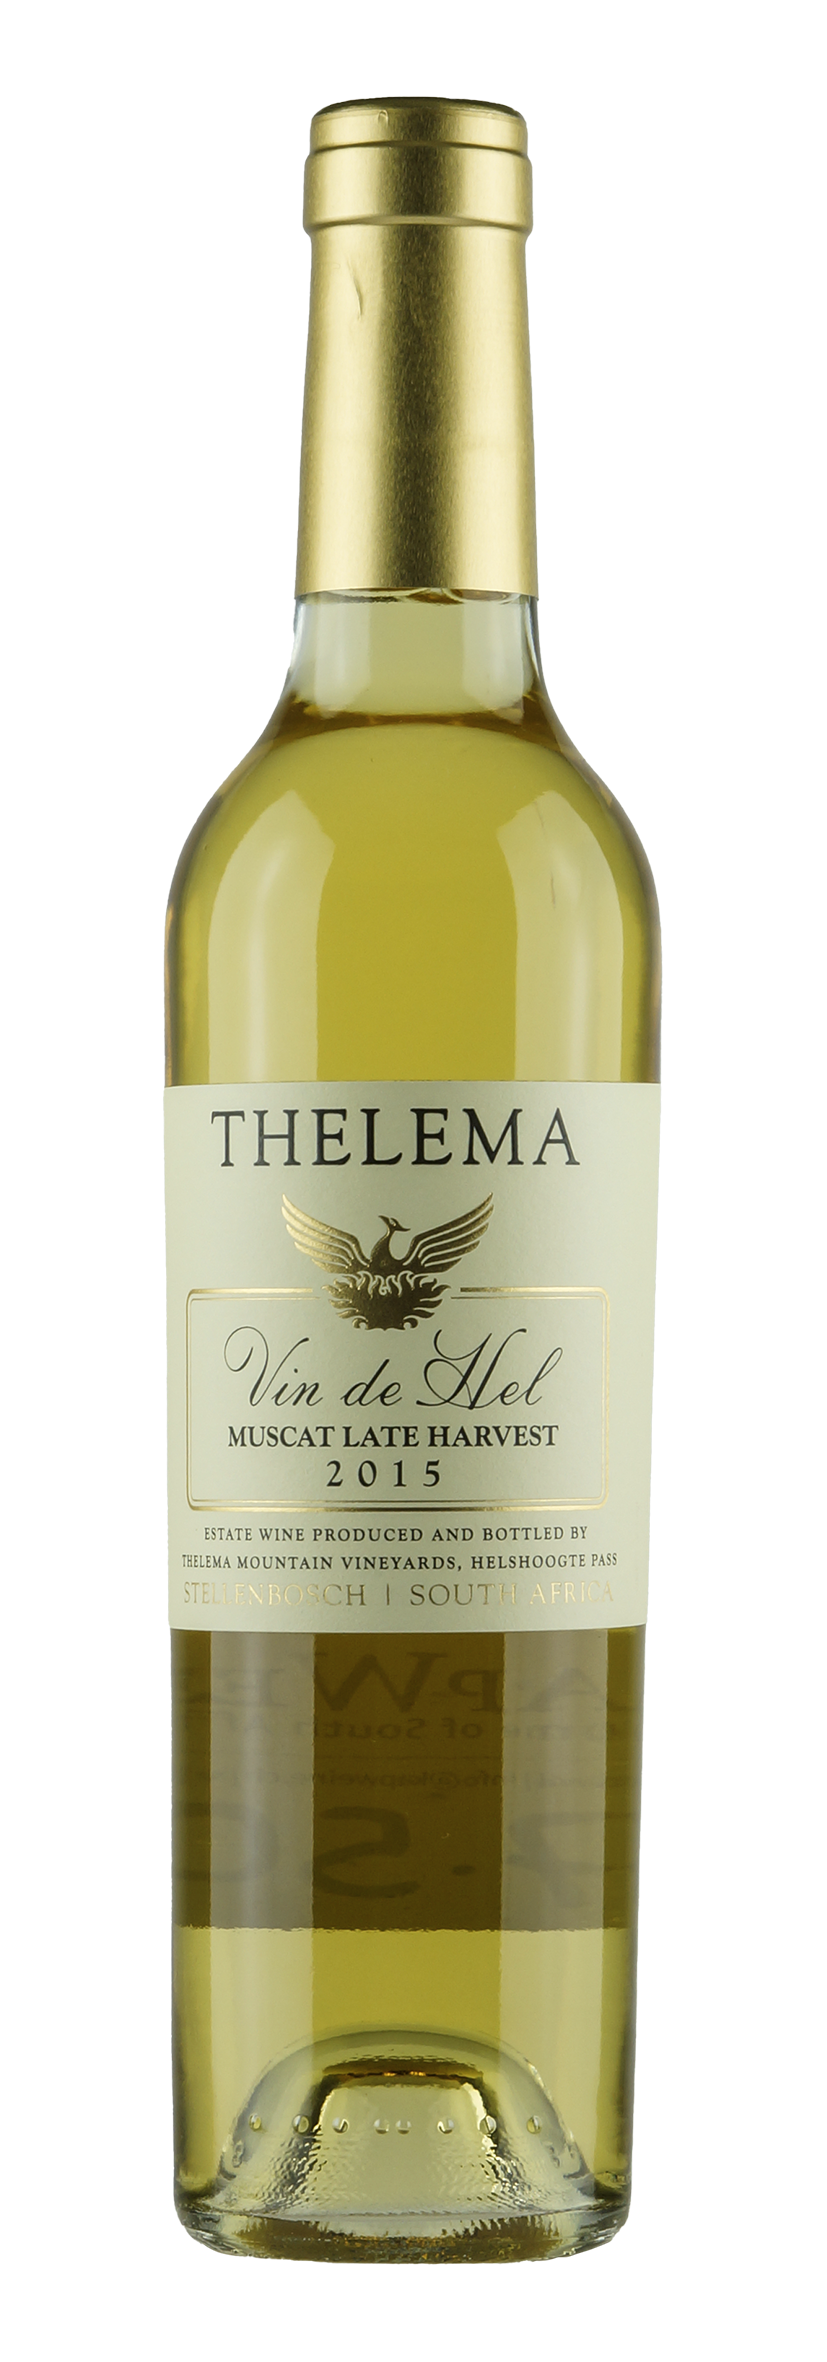 Thelema vin de hel - Muscat late harvest 2015